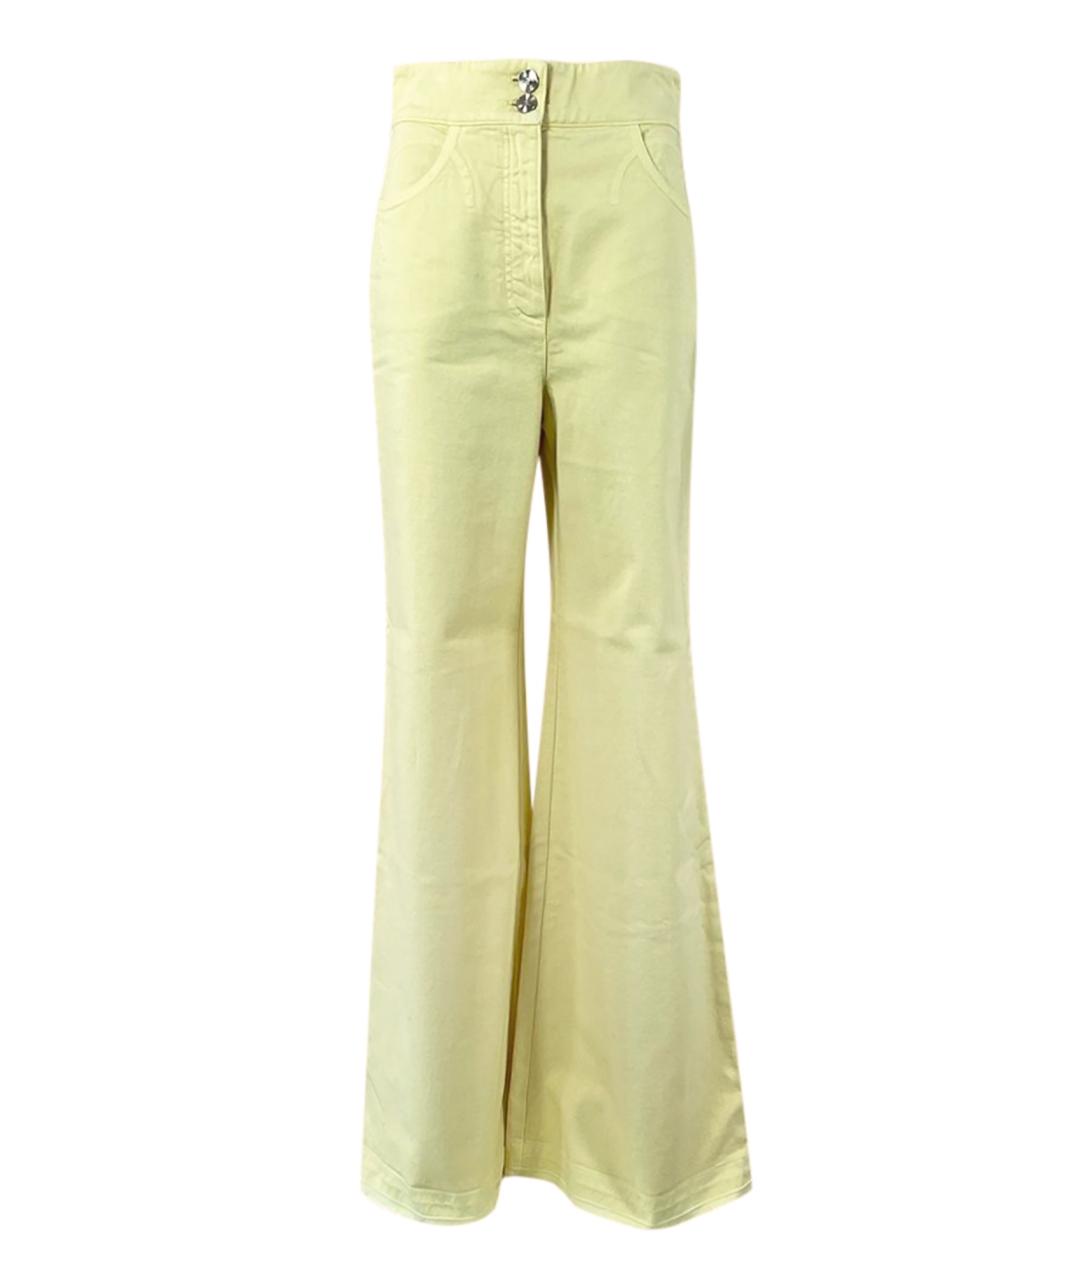 CHANEL PRE-OWNED Желтые хлопковые джинсы клеш, фото 1